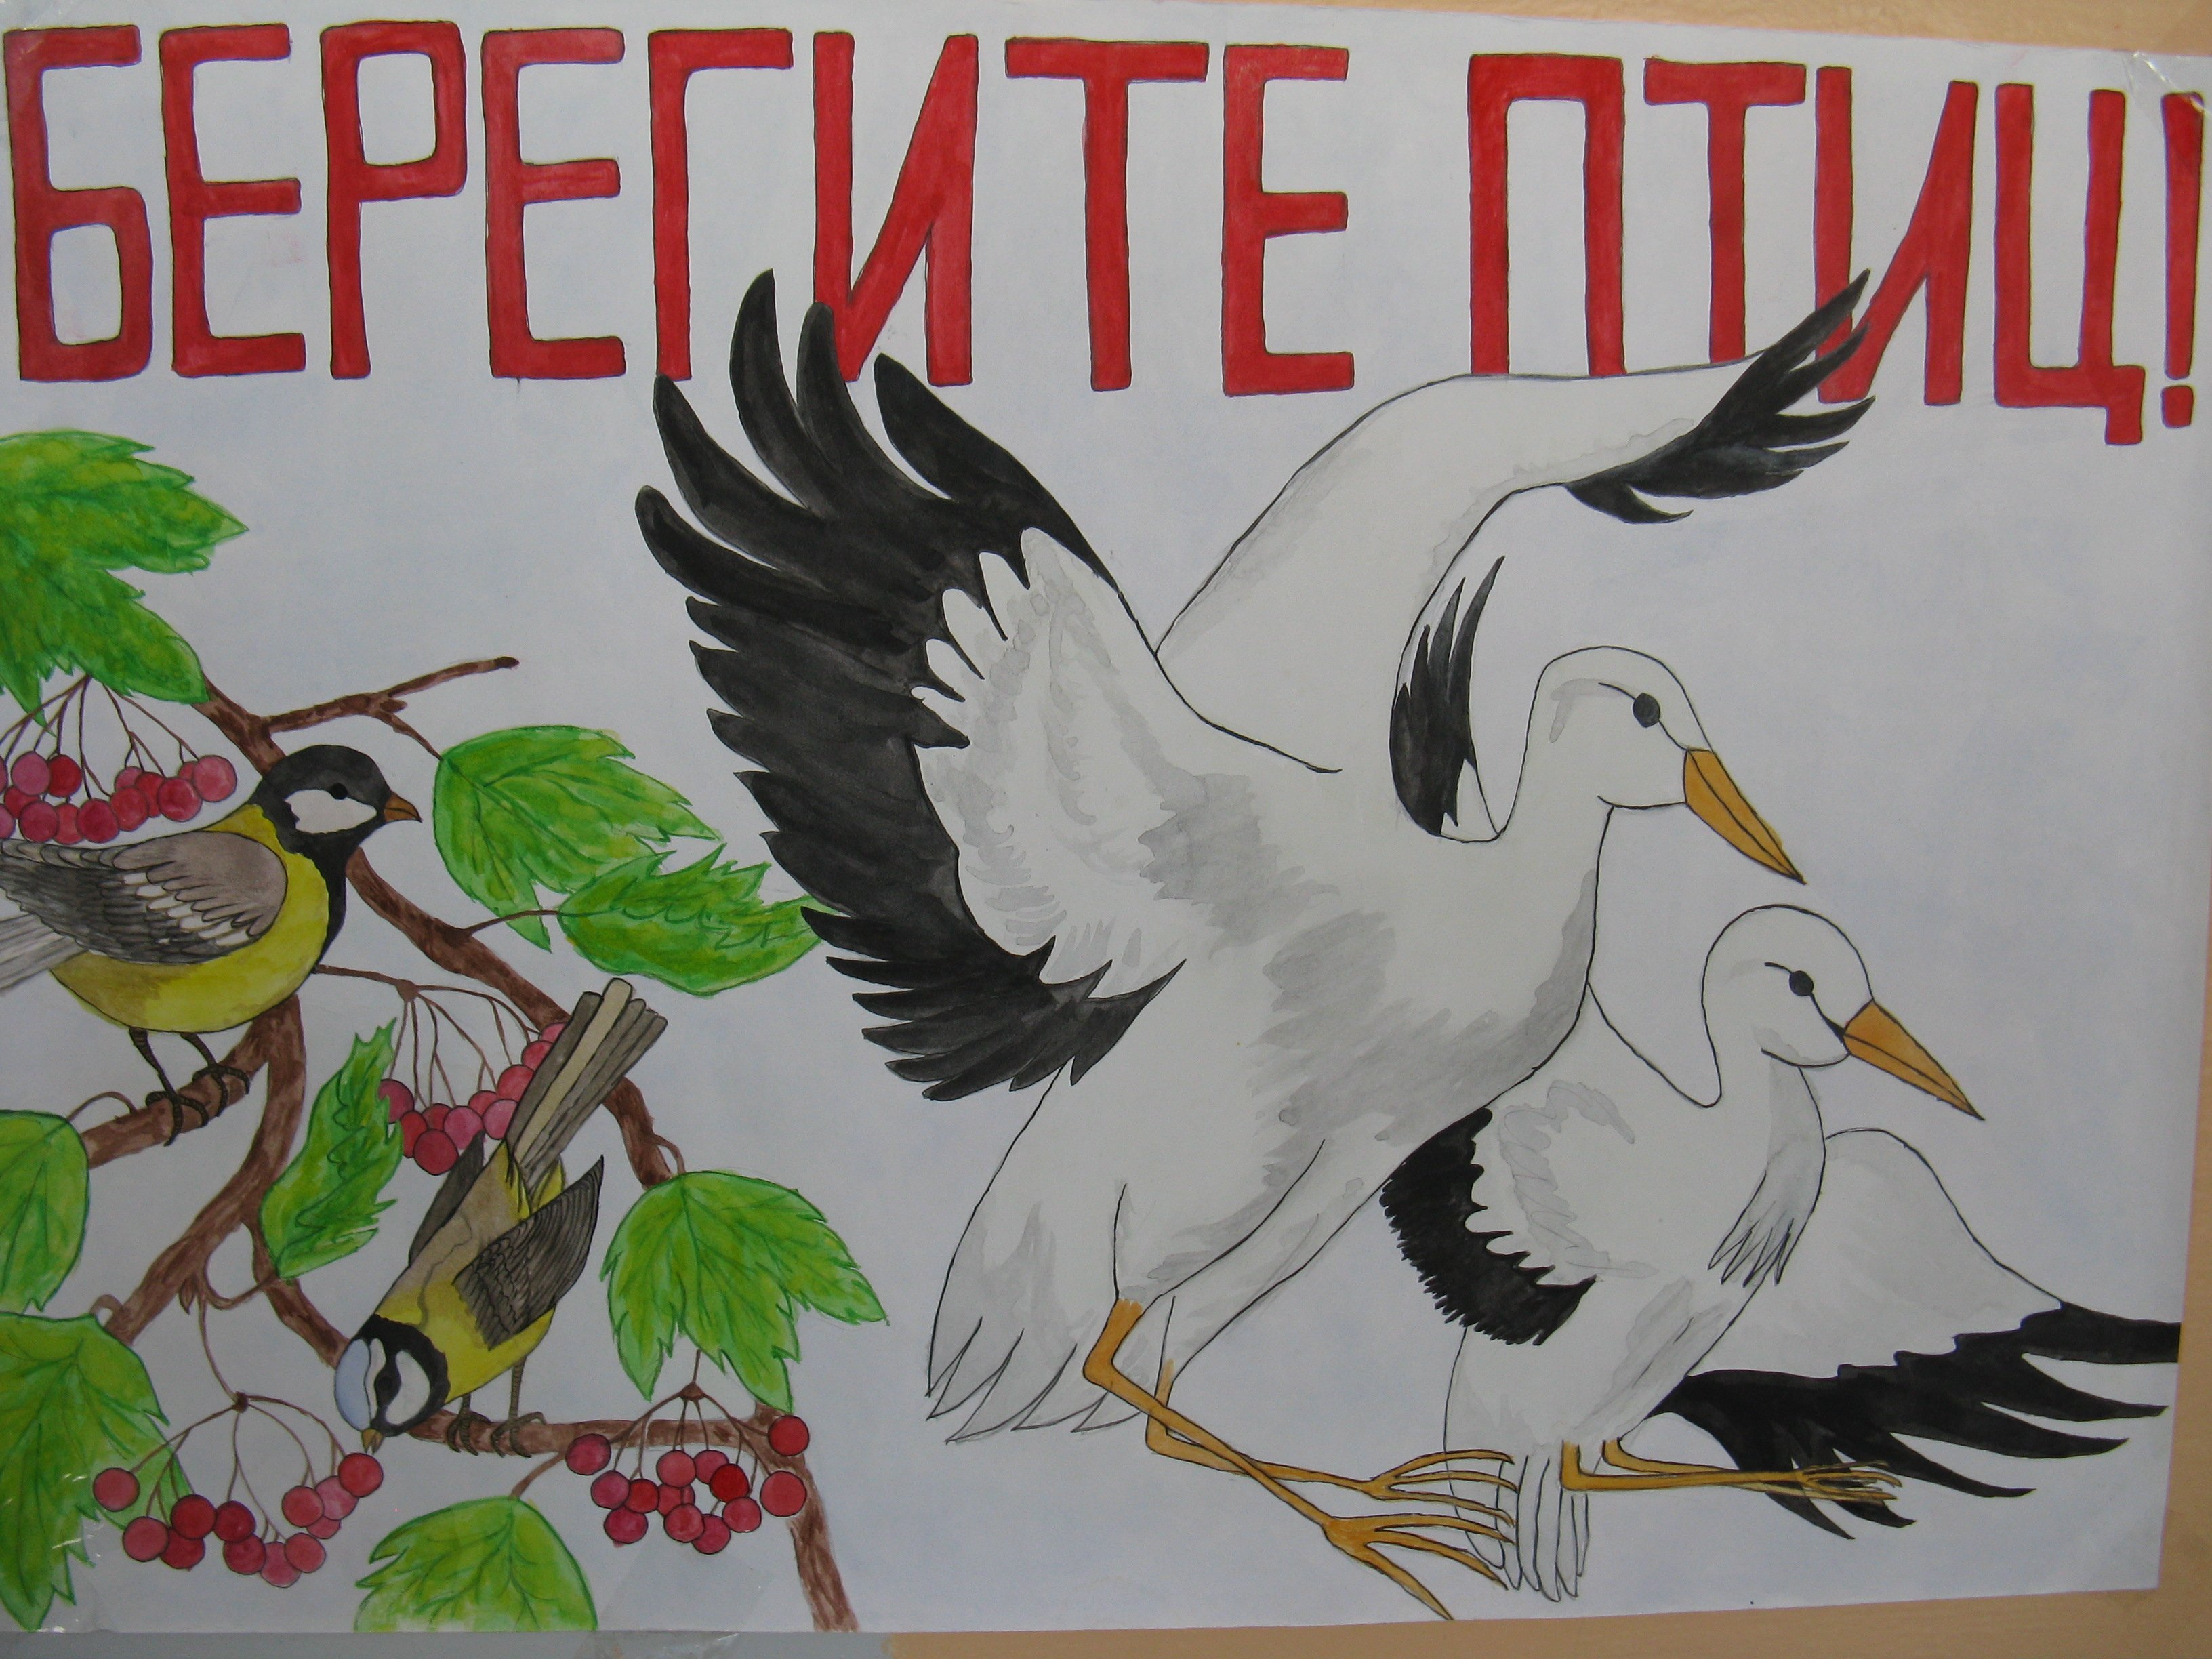 Берегите люди птиц. Газета ко Дню птиц. Плакат на день птиц. Международный день птиц рисунок. Картина на день птиц.